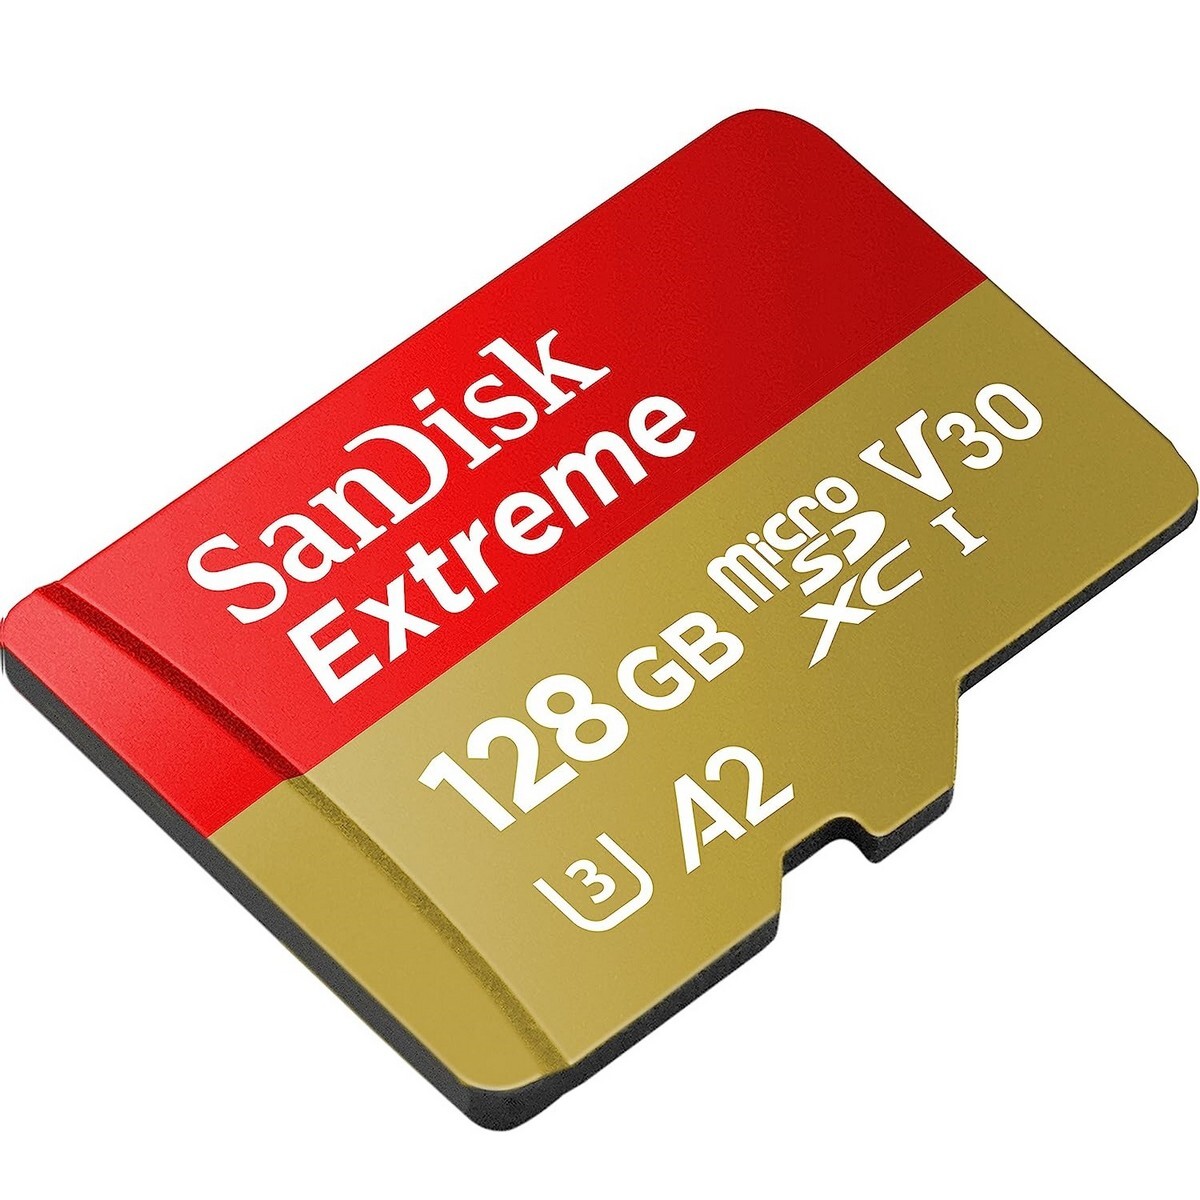 SanDisk Extreme MicroSD SQXAA 190/90MB/s 128GB